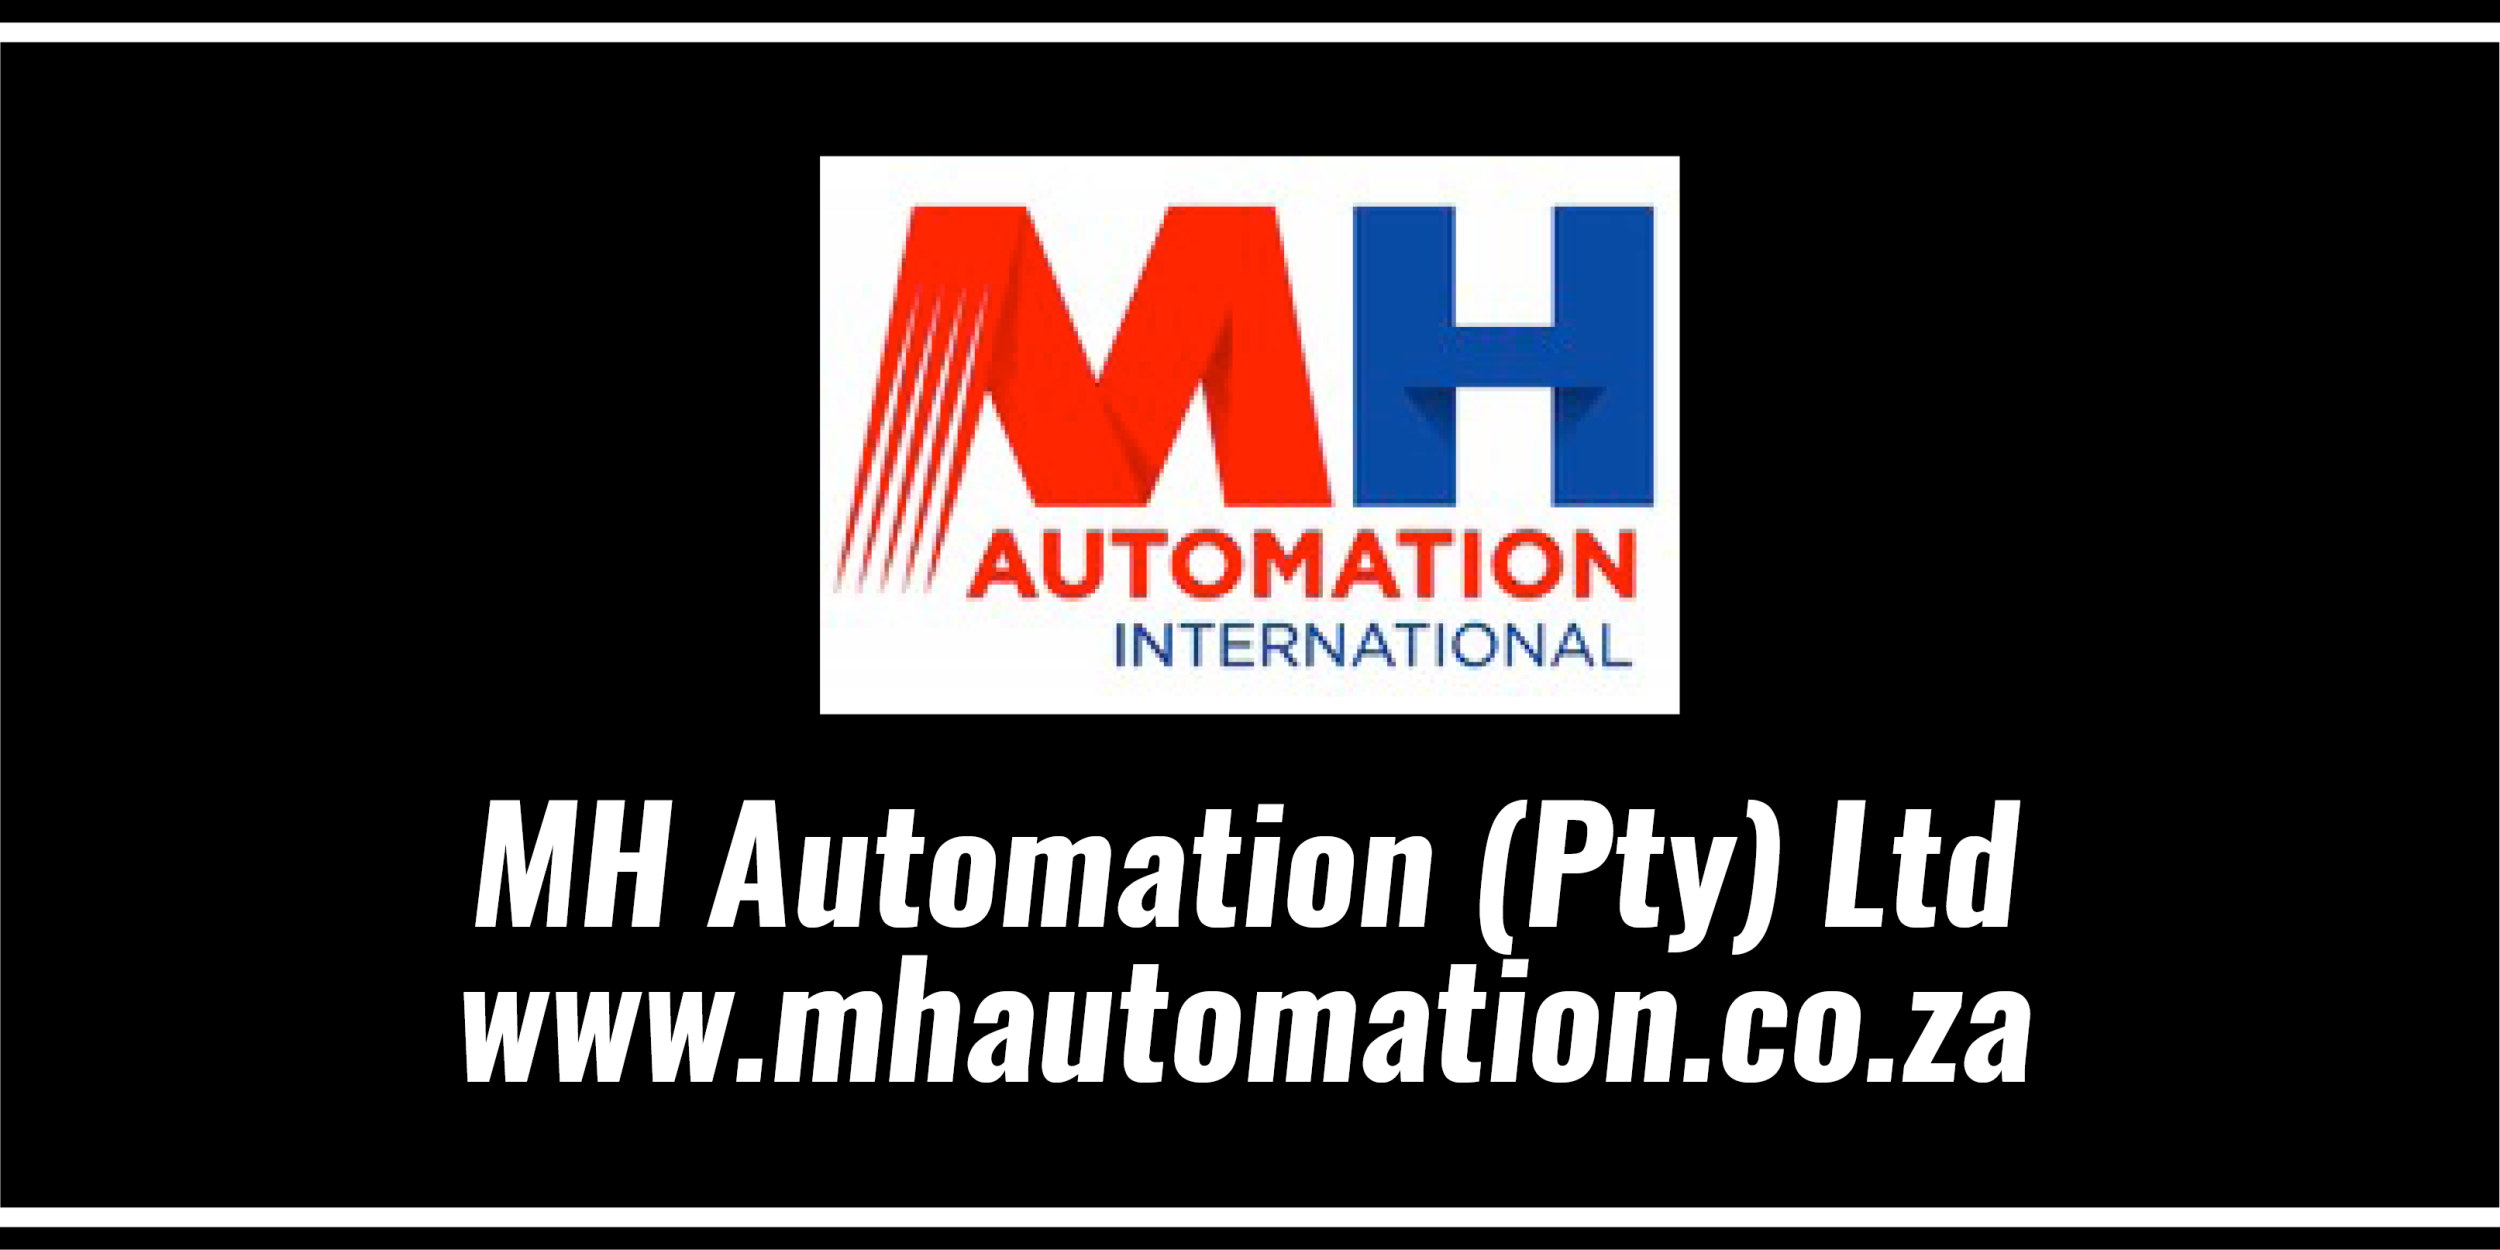 MH Automation (Pty) Ltd